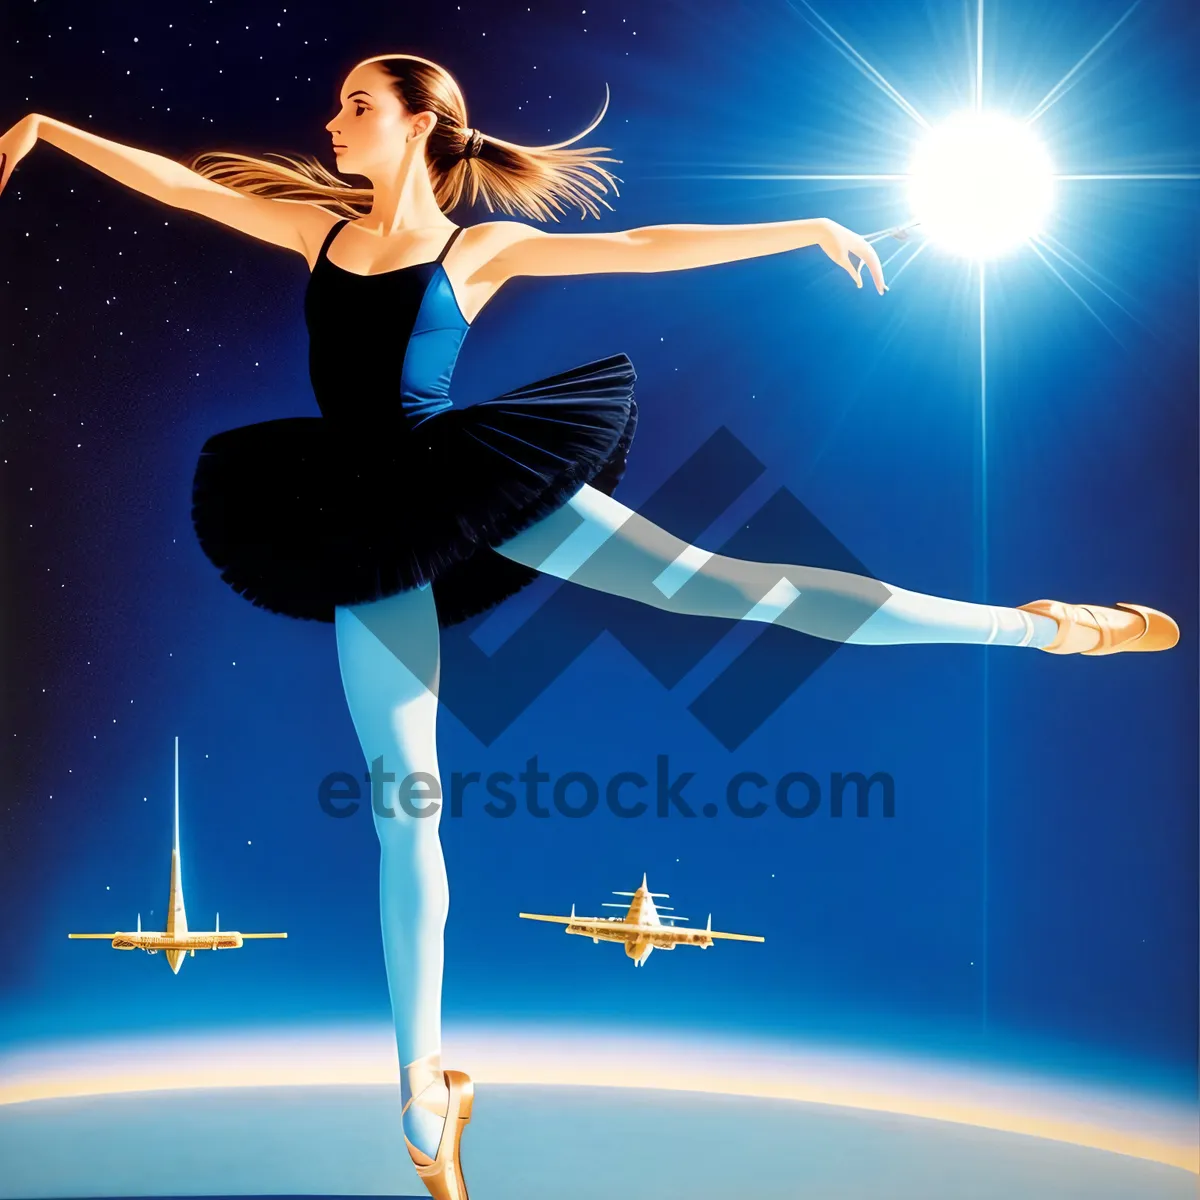 Picture of Graceful Ballerina in Elegant Dance Pose